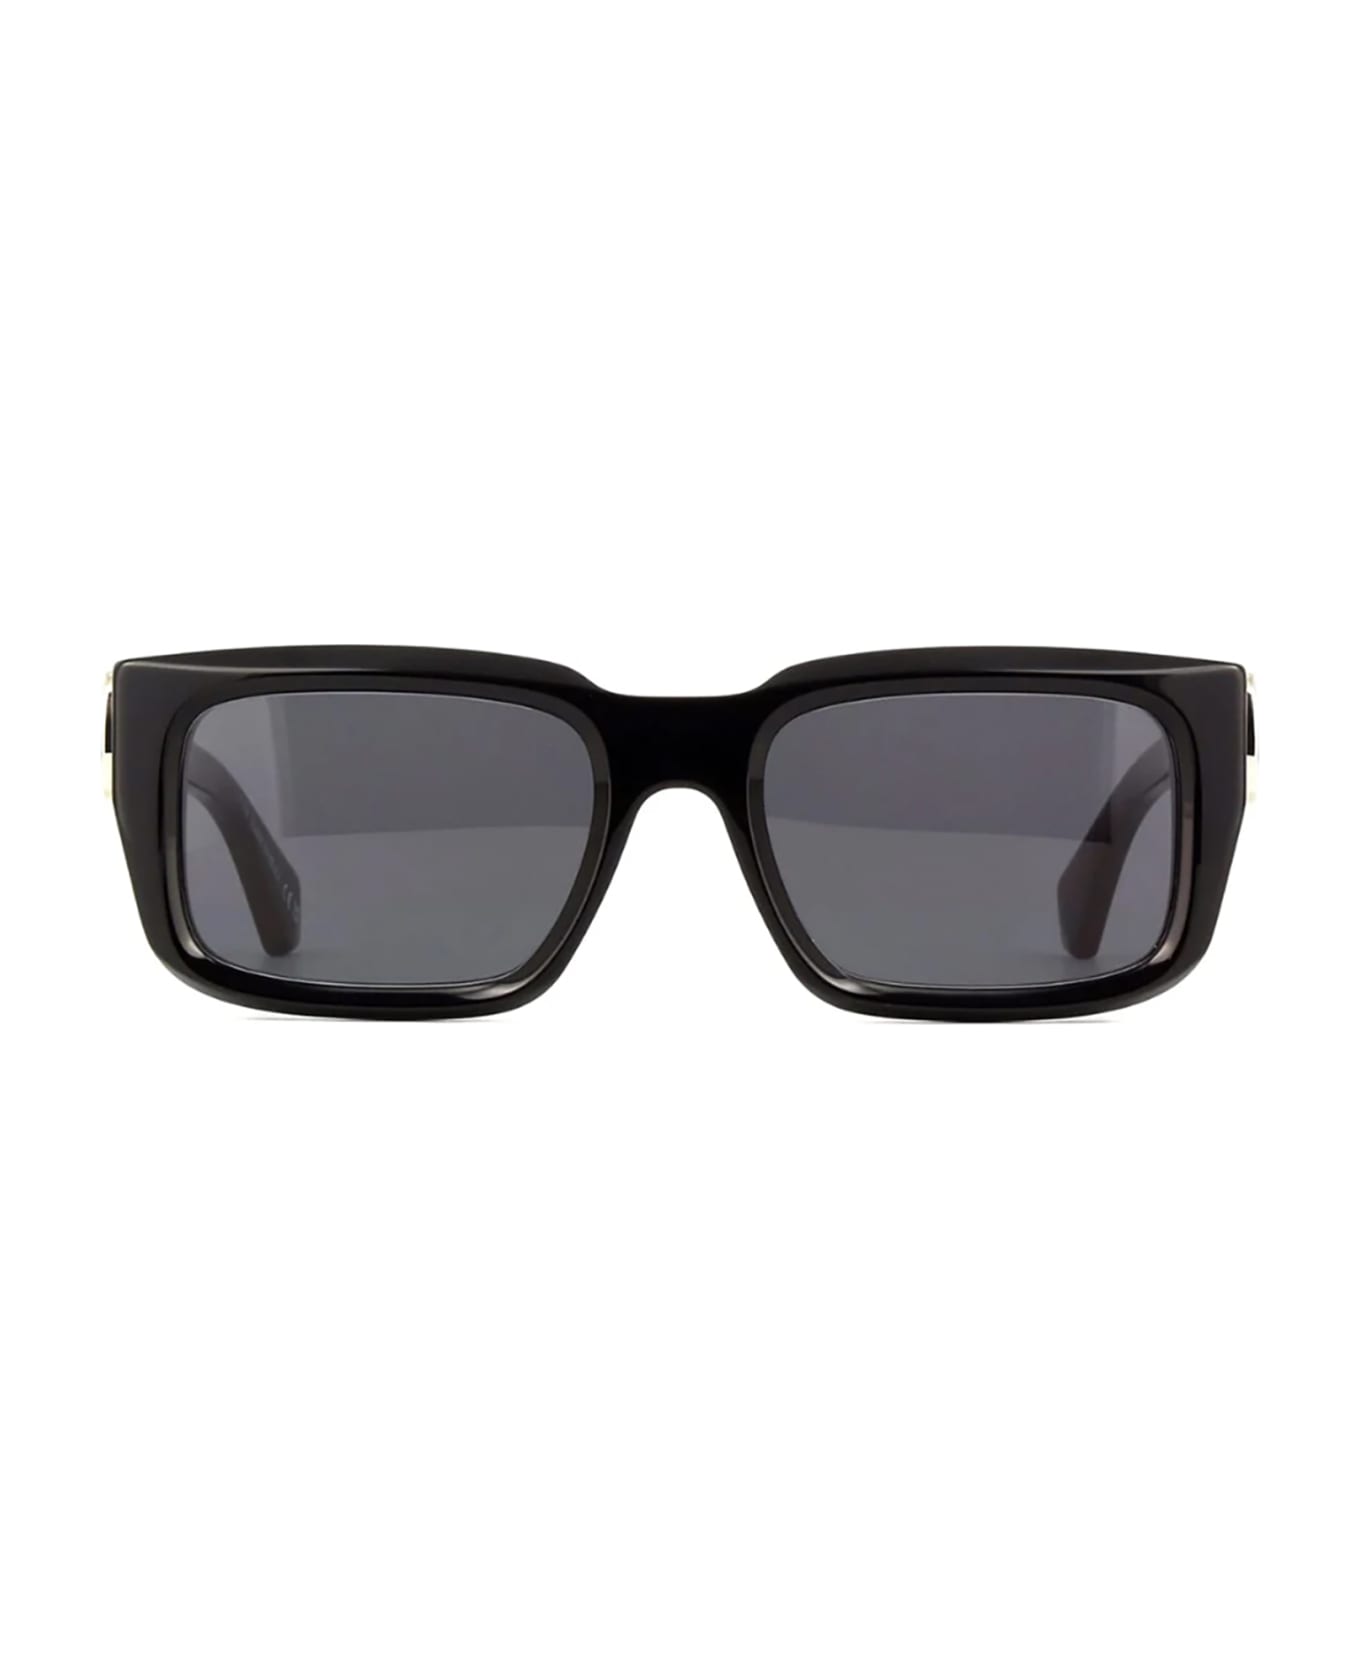 Off-White OERI125 HAYS Sunglasses - Black Dark Grey